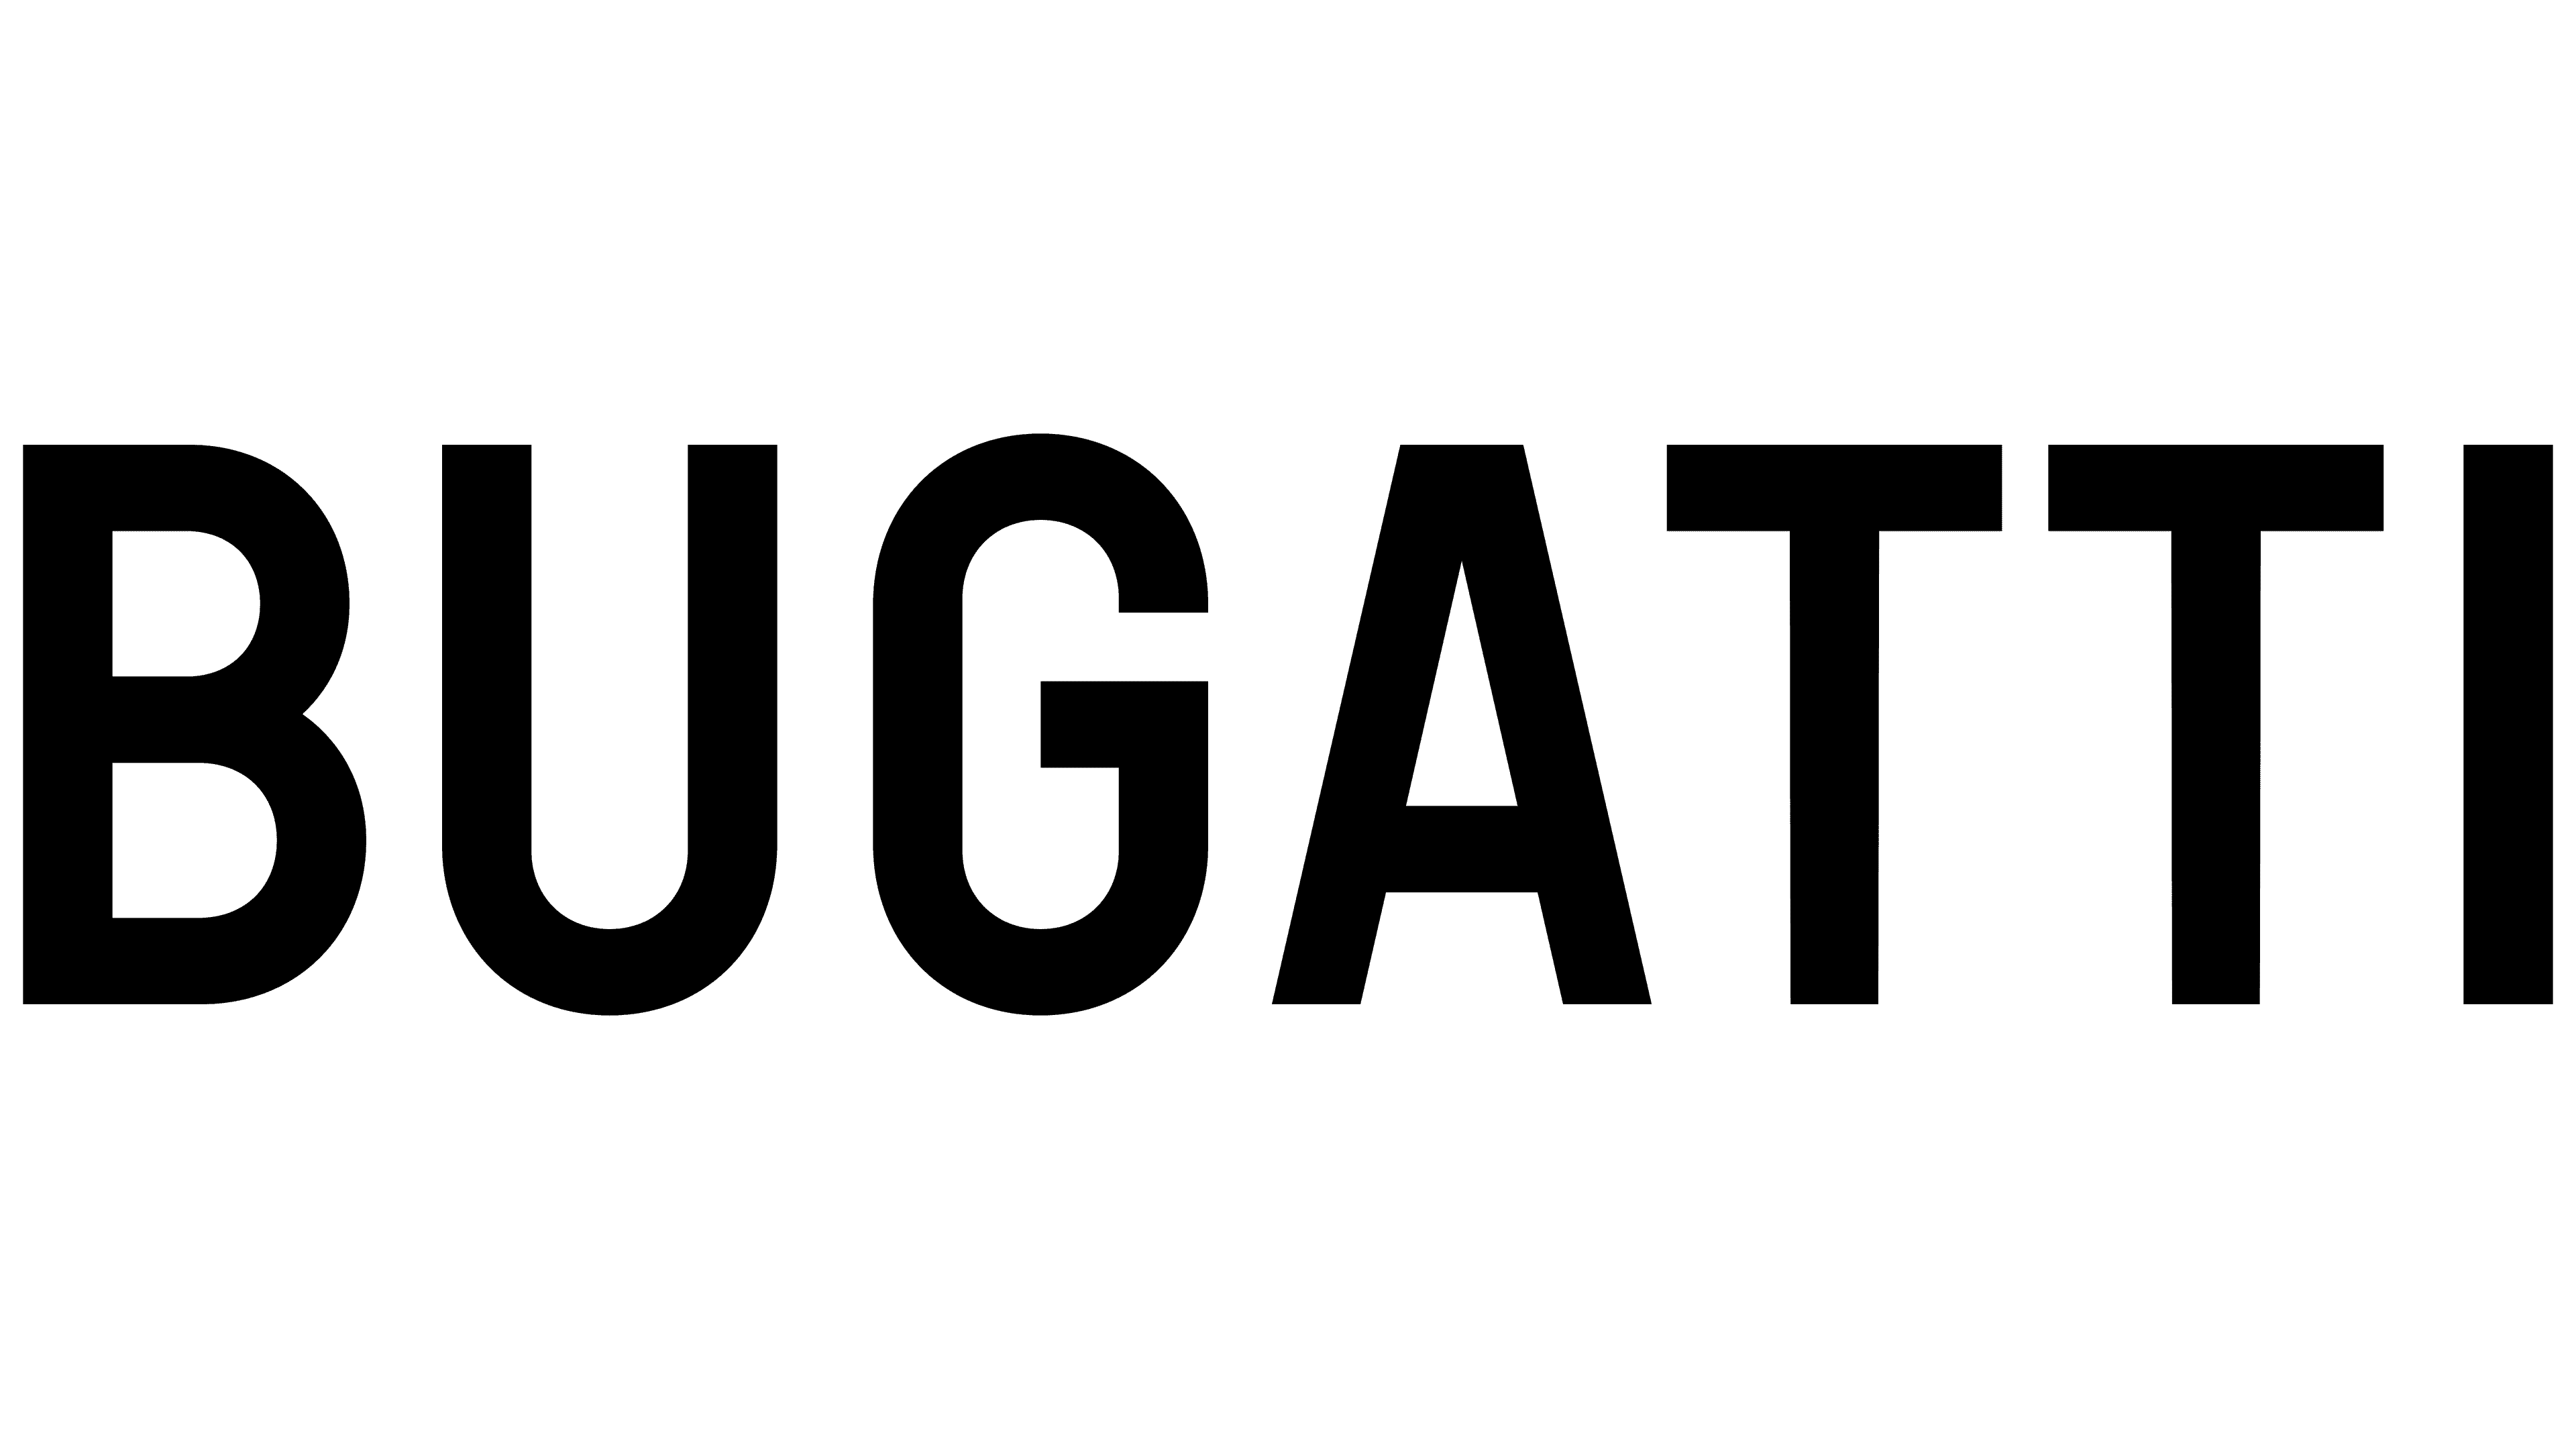 Bugatti logo 1080P, 2K, 4K, 5K HD wallpapers free download | Wallpaper Flare